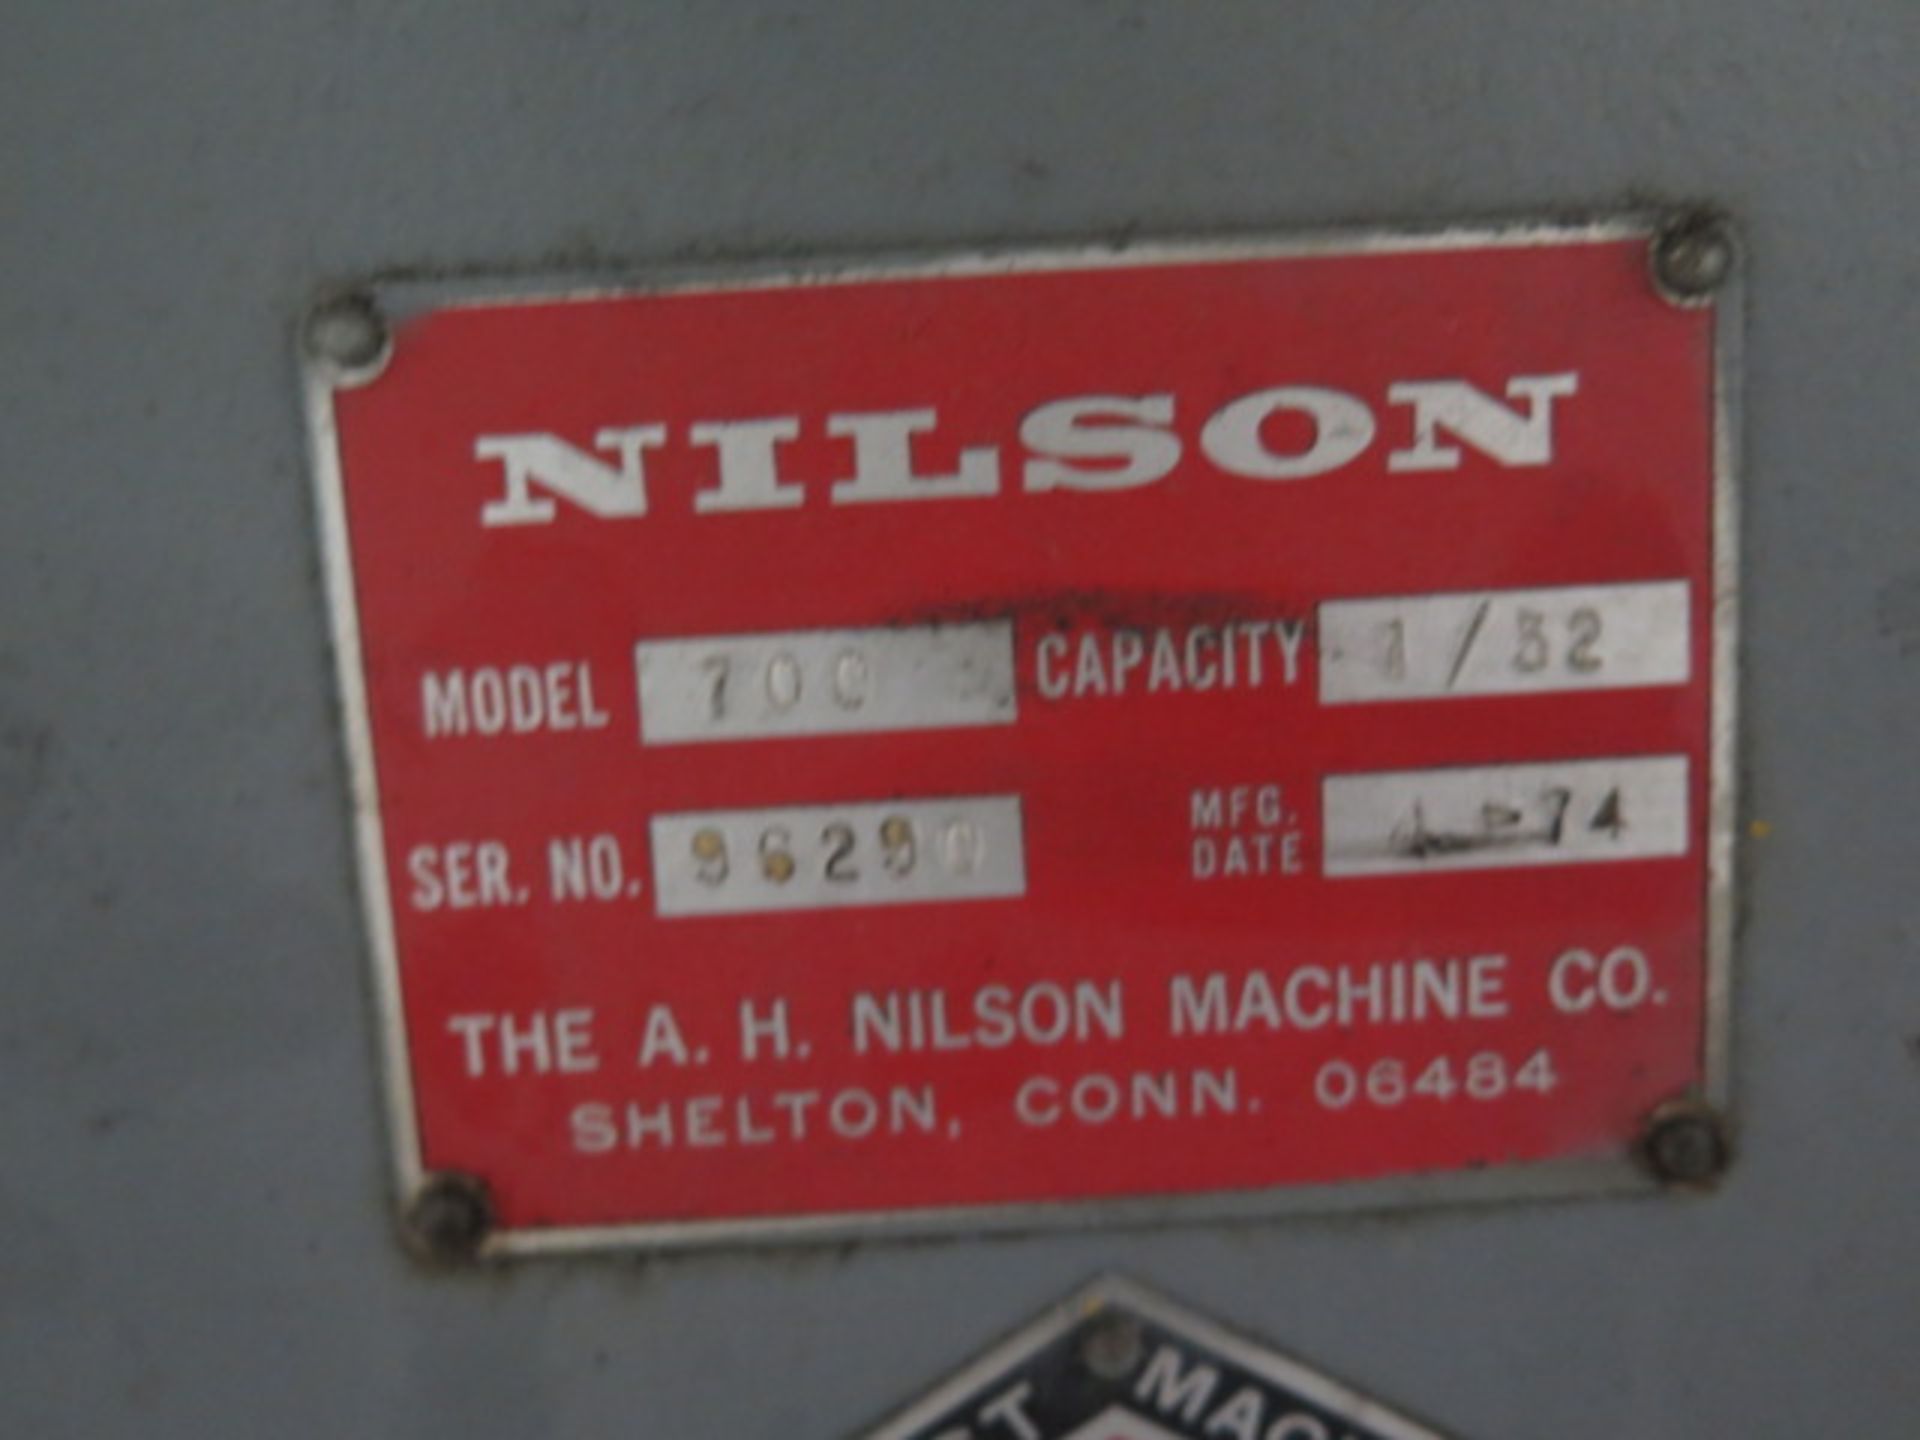 Nilson mdl. 700 1/32" Cap 4-Slide Machine s/n 96290 w/ Straightner. - Image 7 of 7